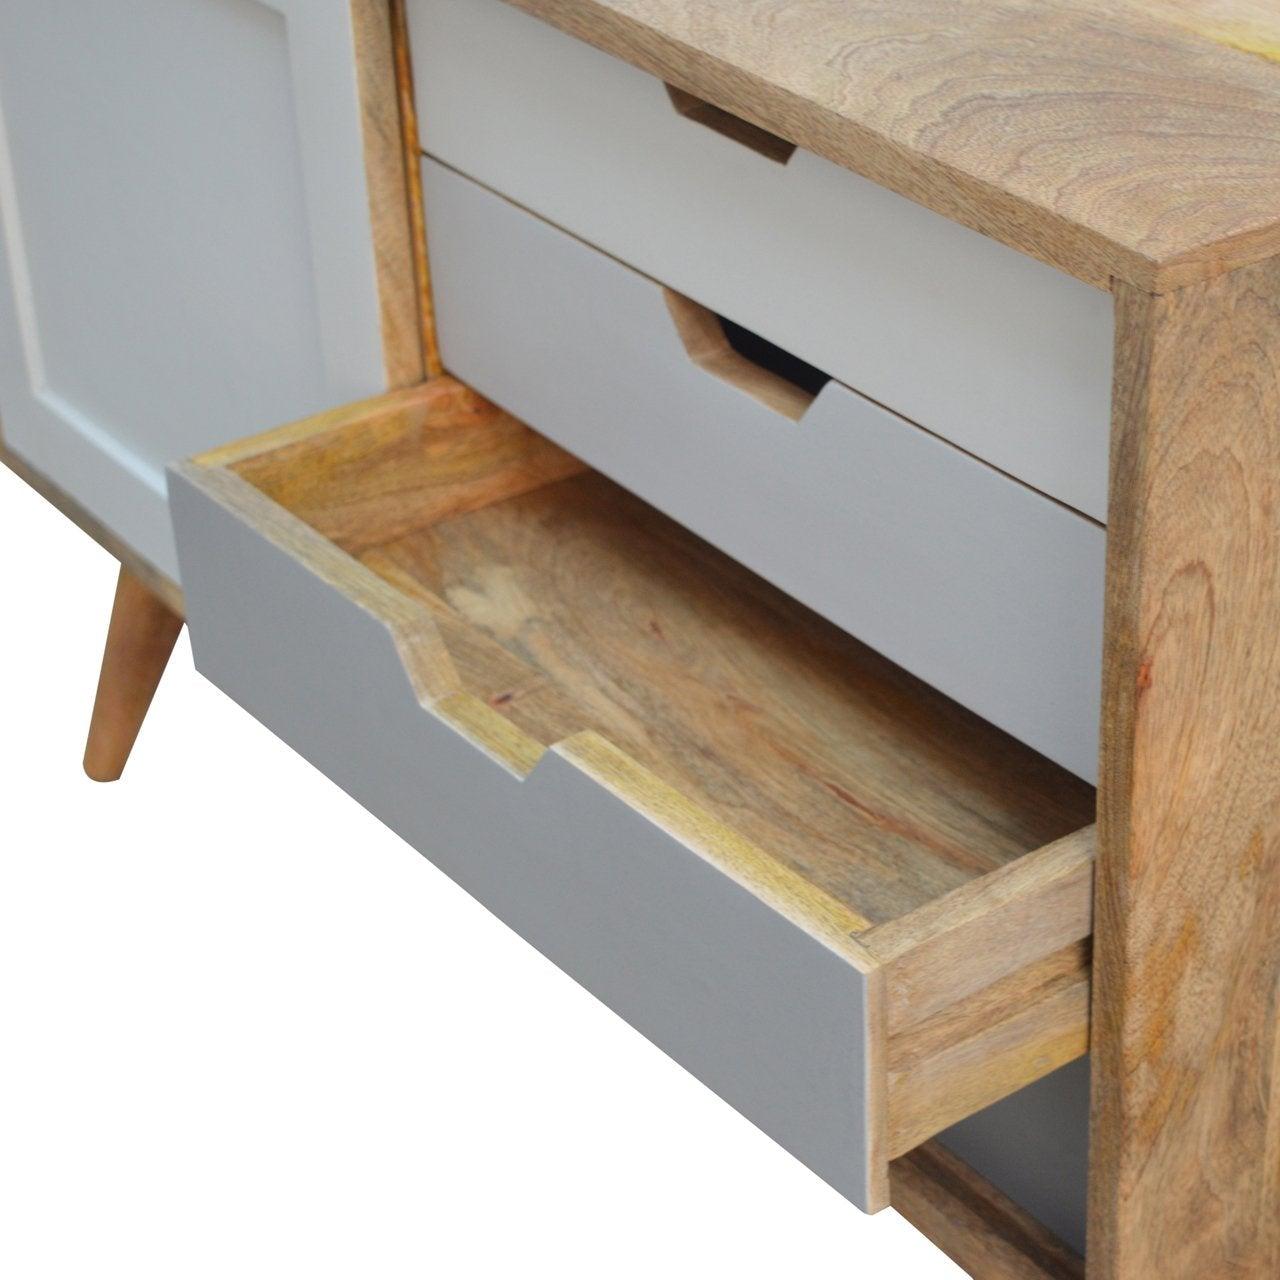 Nordic sliding cabinet with 4 drawers - crimblefest furniture - image 9